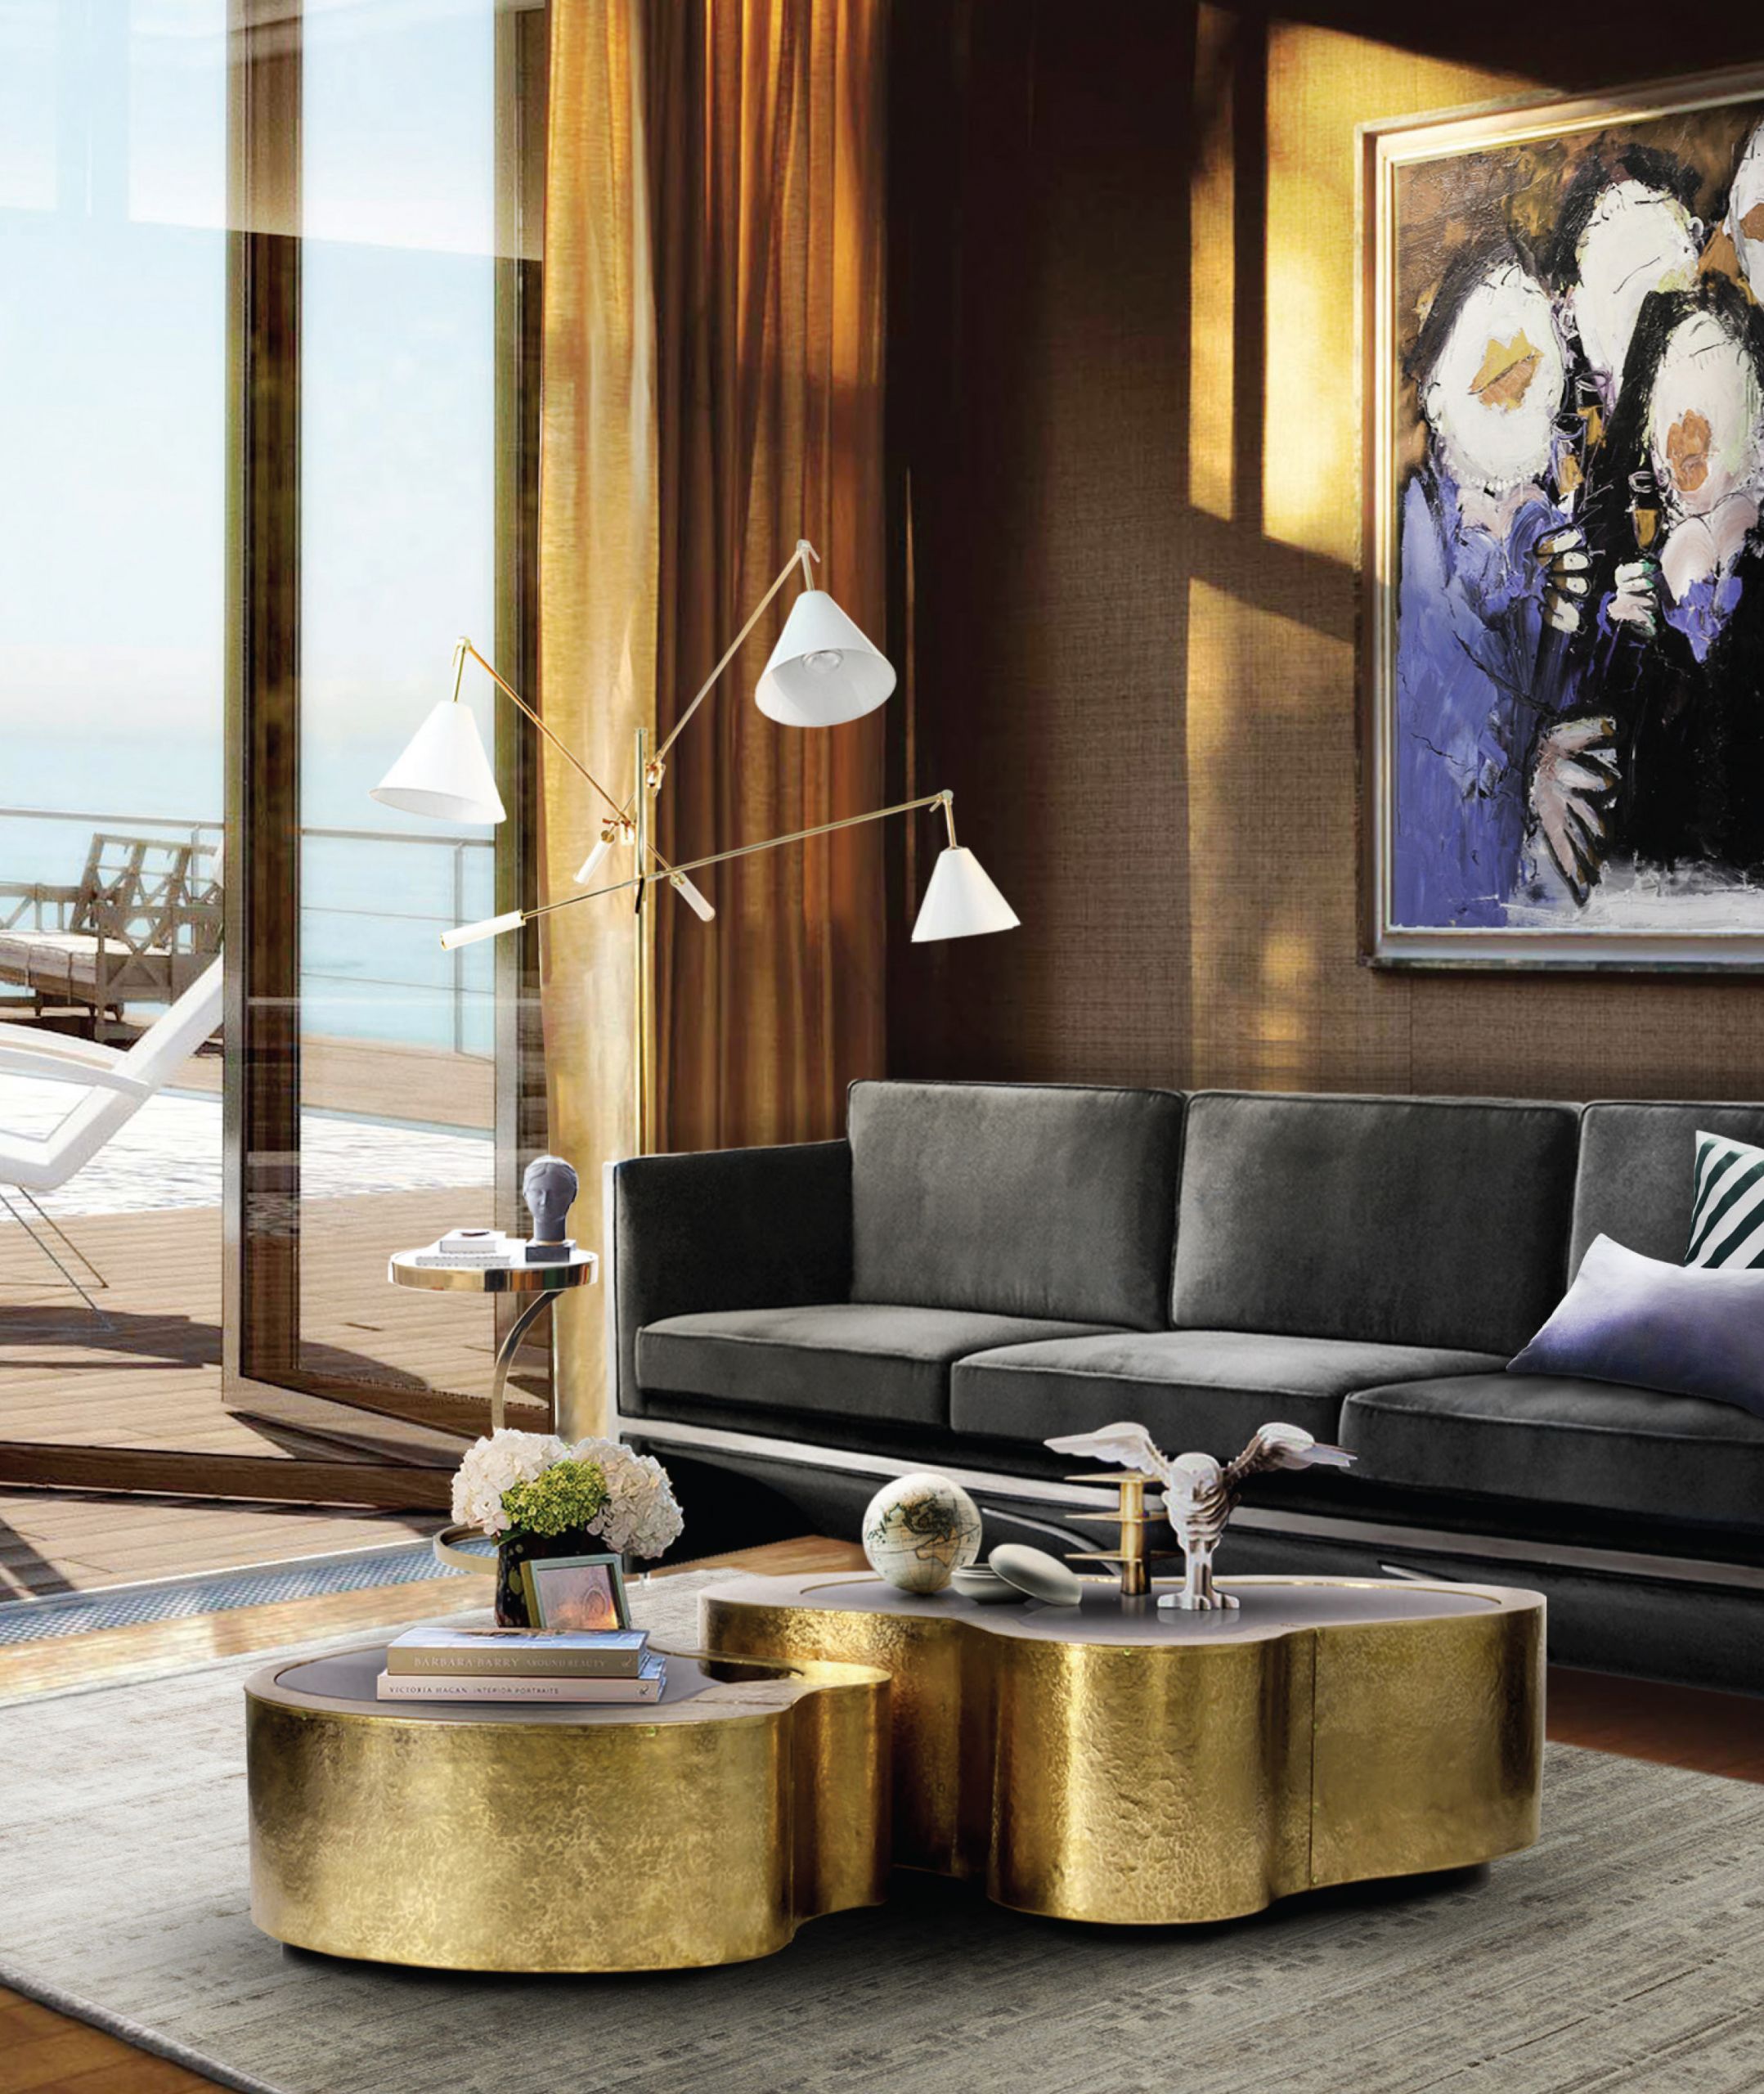 Modern Classic Living Room
 DESIGN INSPIRATION FOR THE LUXURIOUS MODERN CLASSIC LIVING